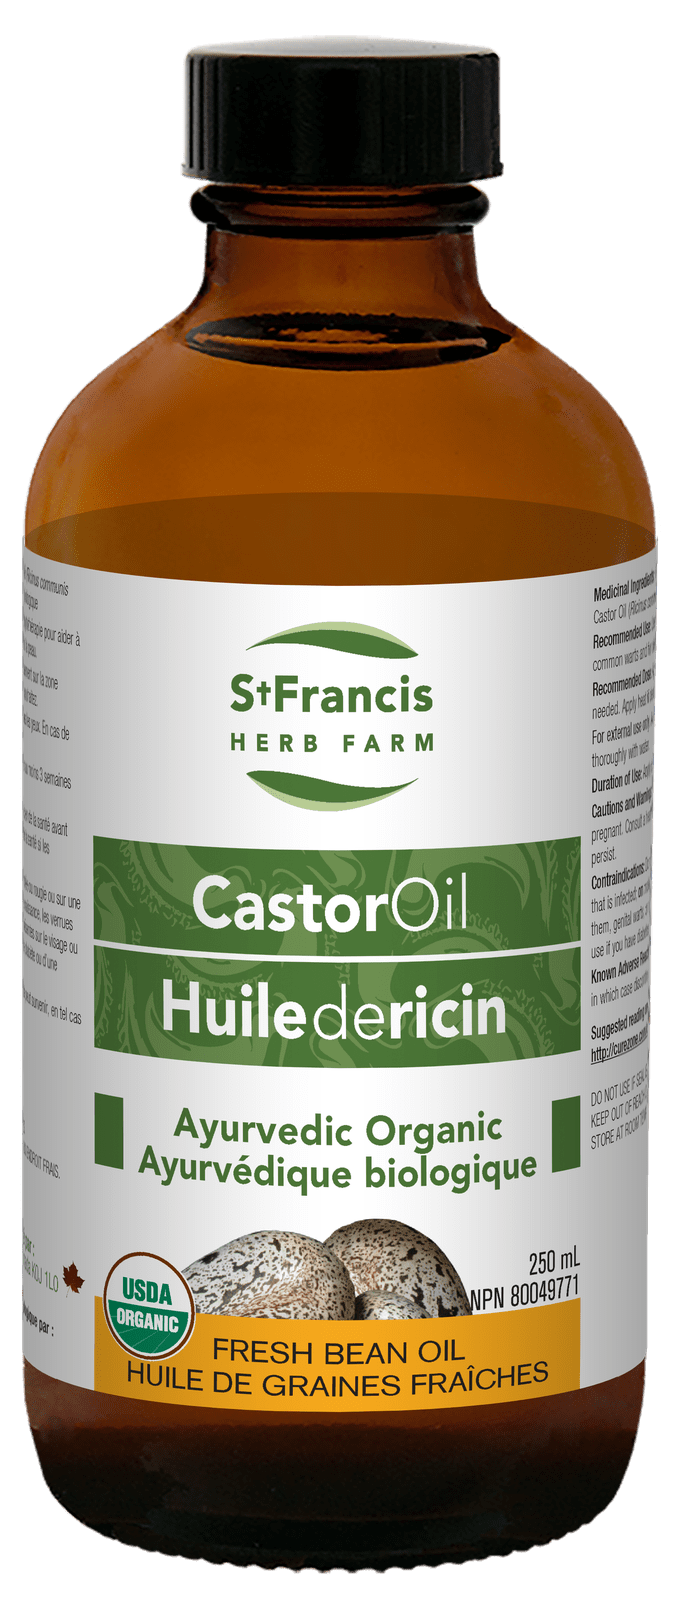 St Francis Herb Farm Castor Oil Image 2